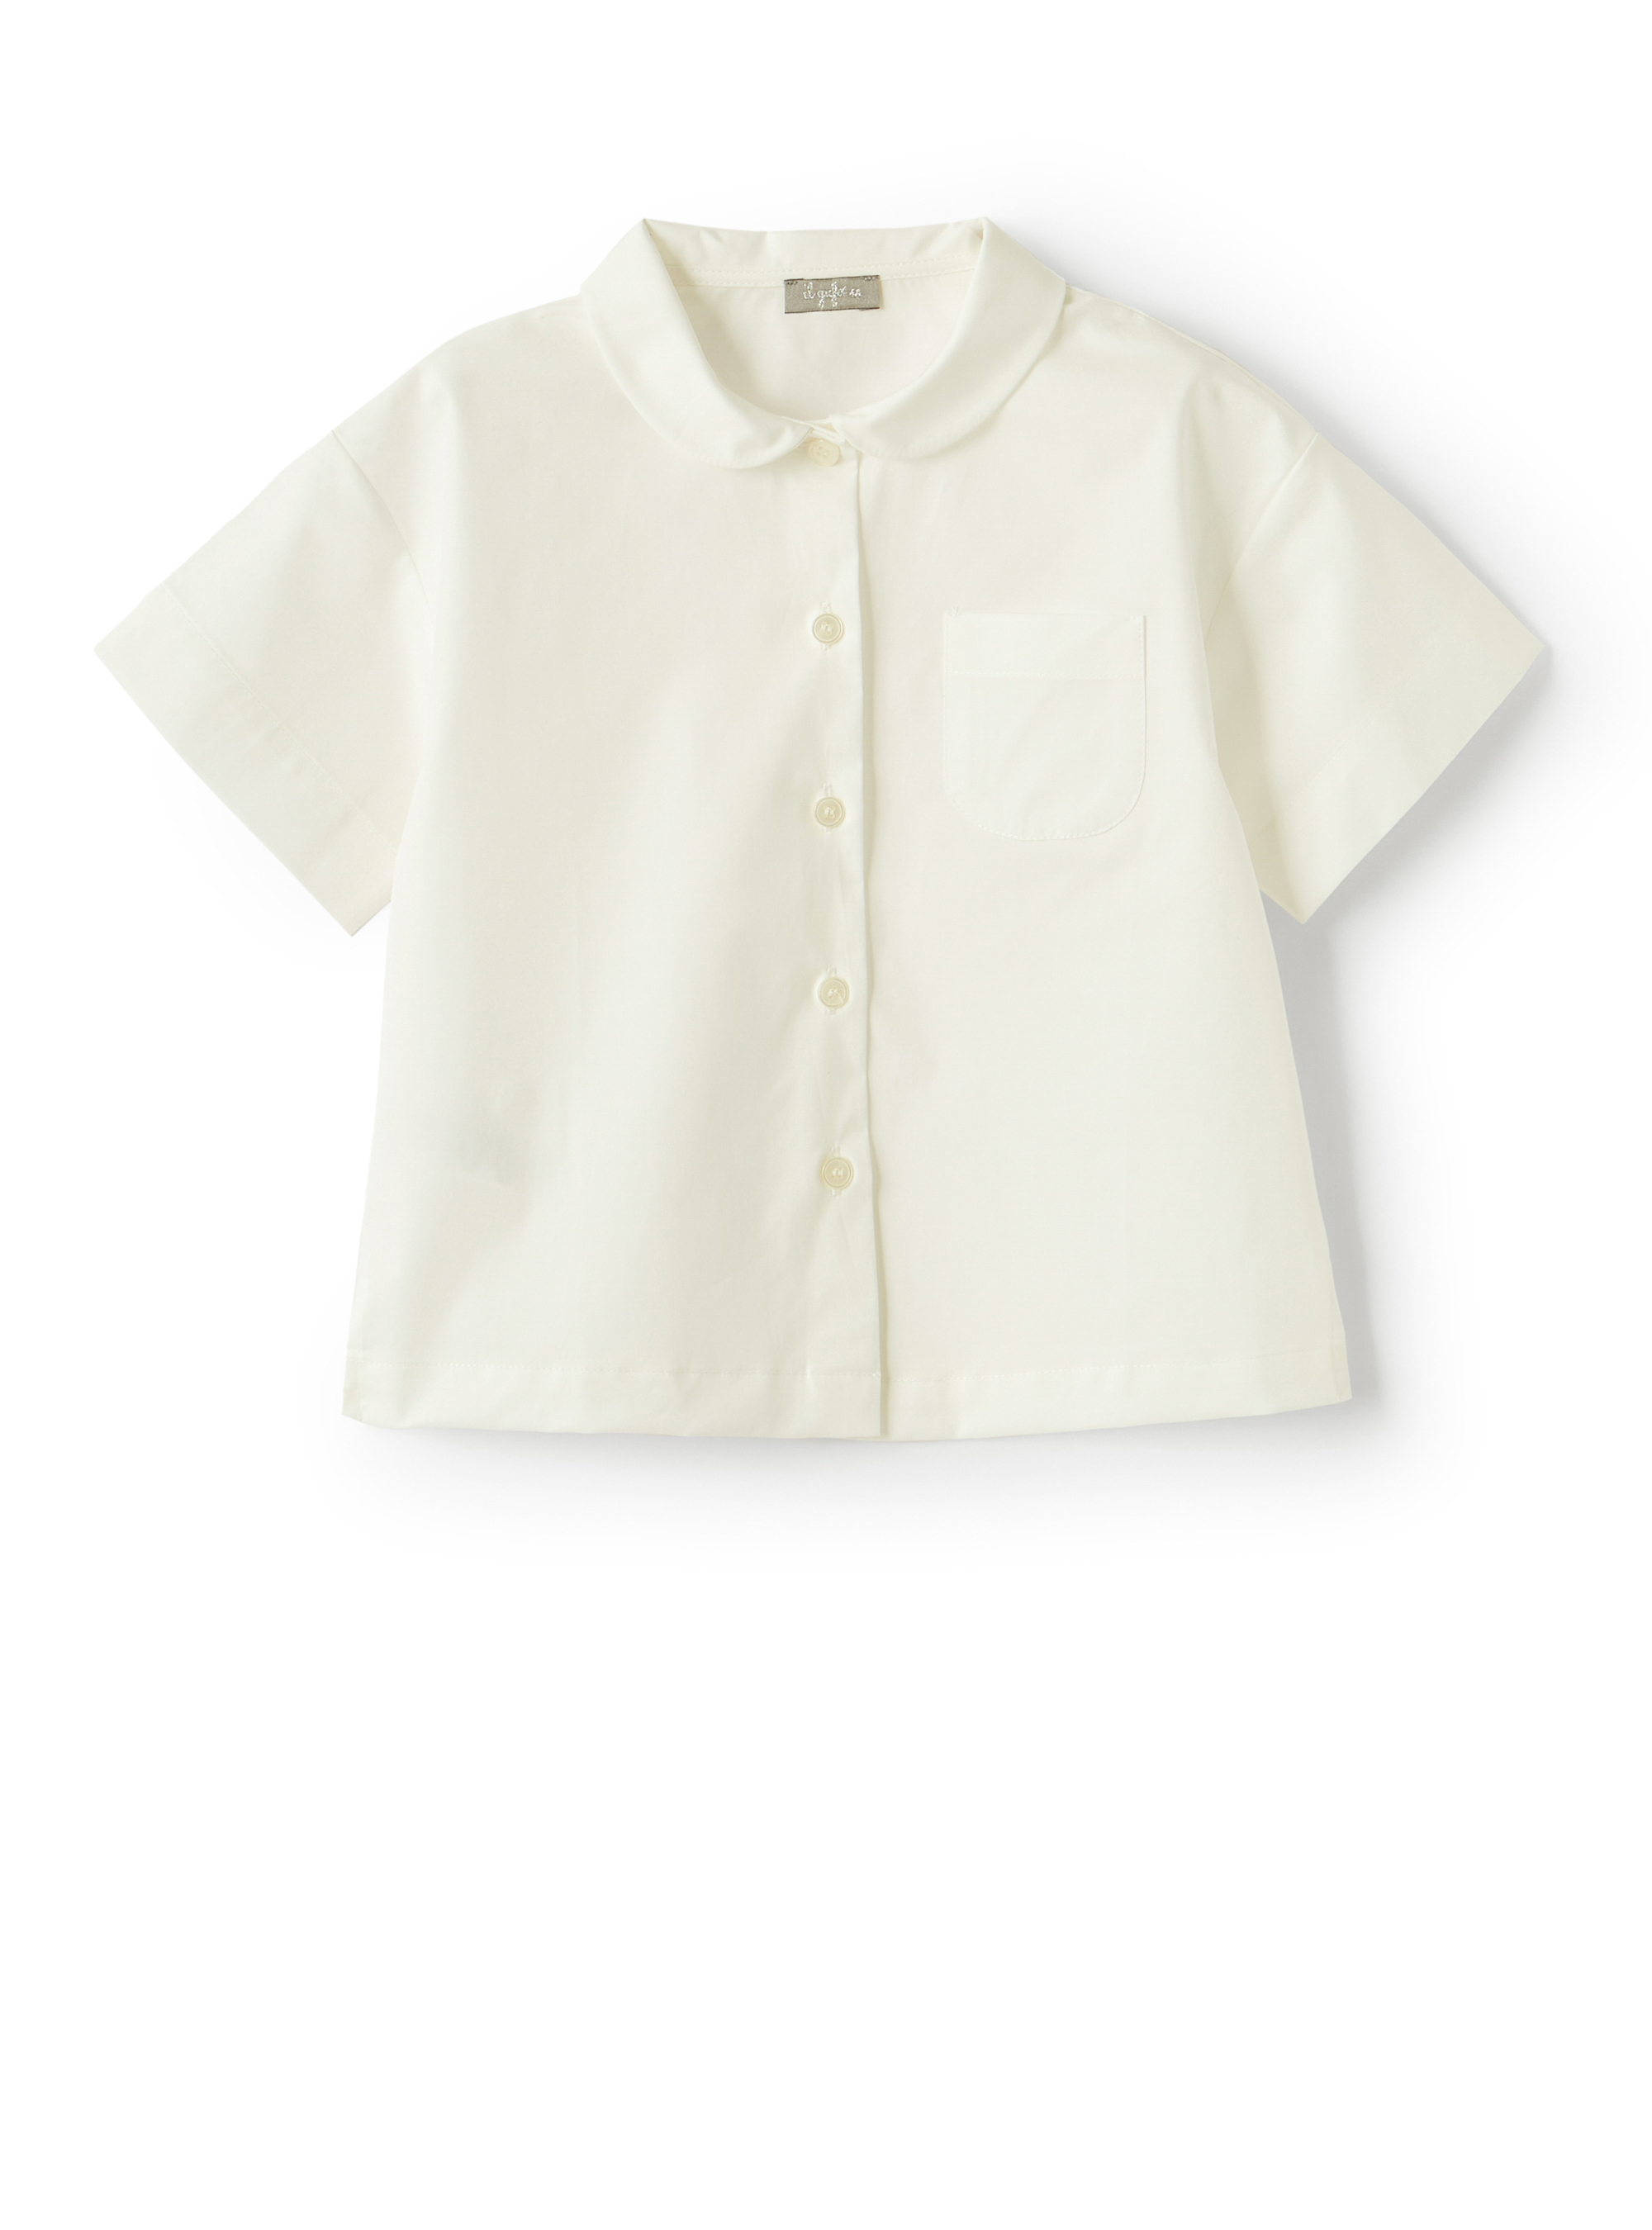 White cotton shirt with breast pocket - White | Il Gufo